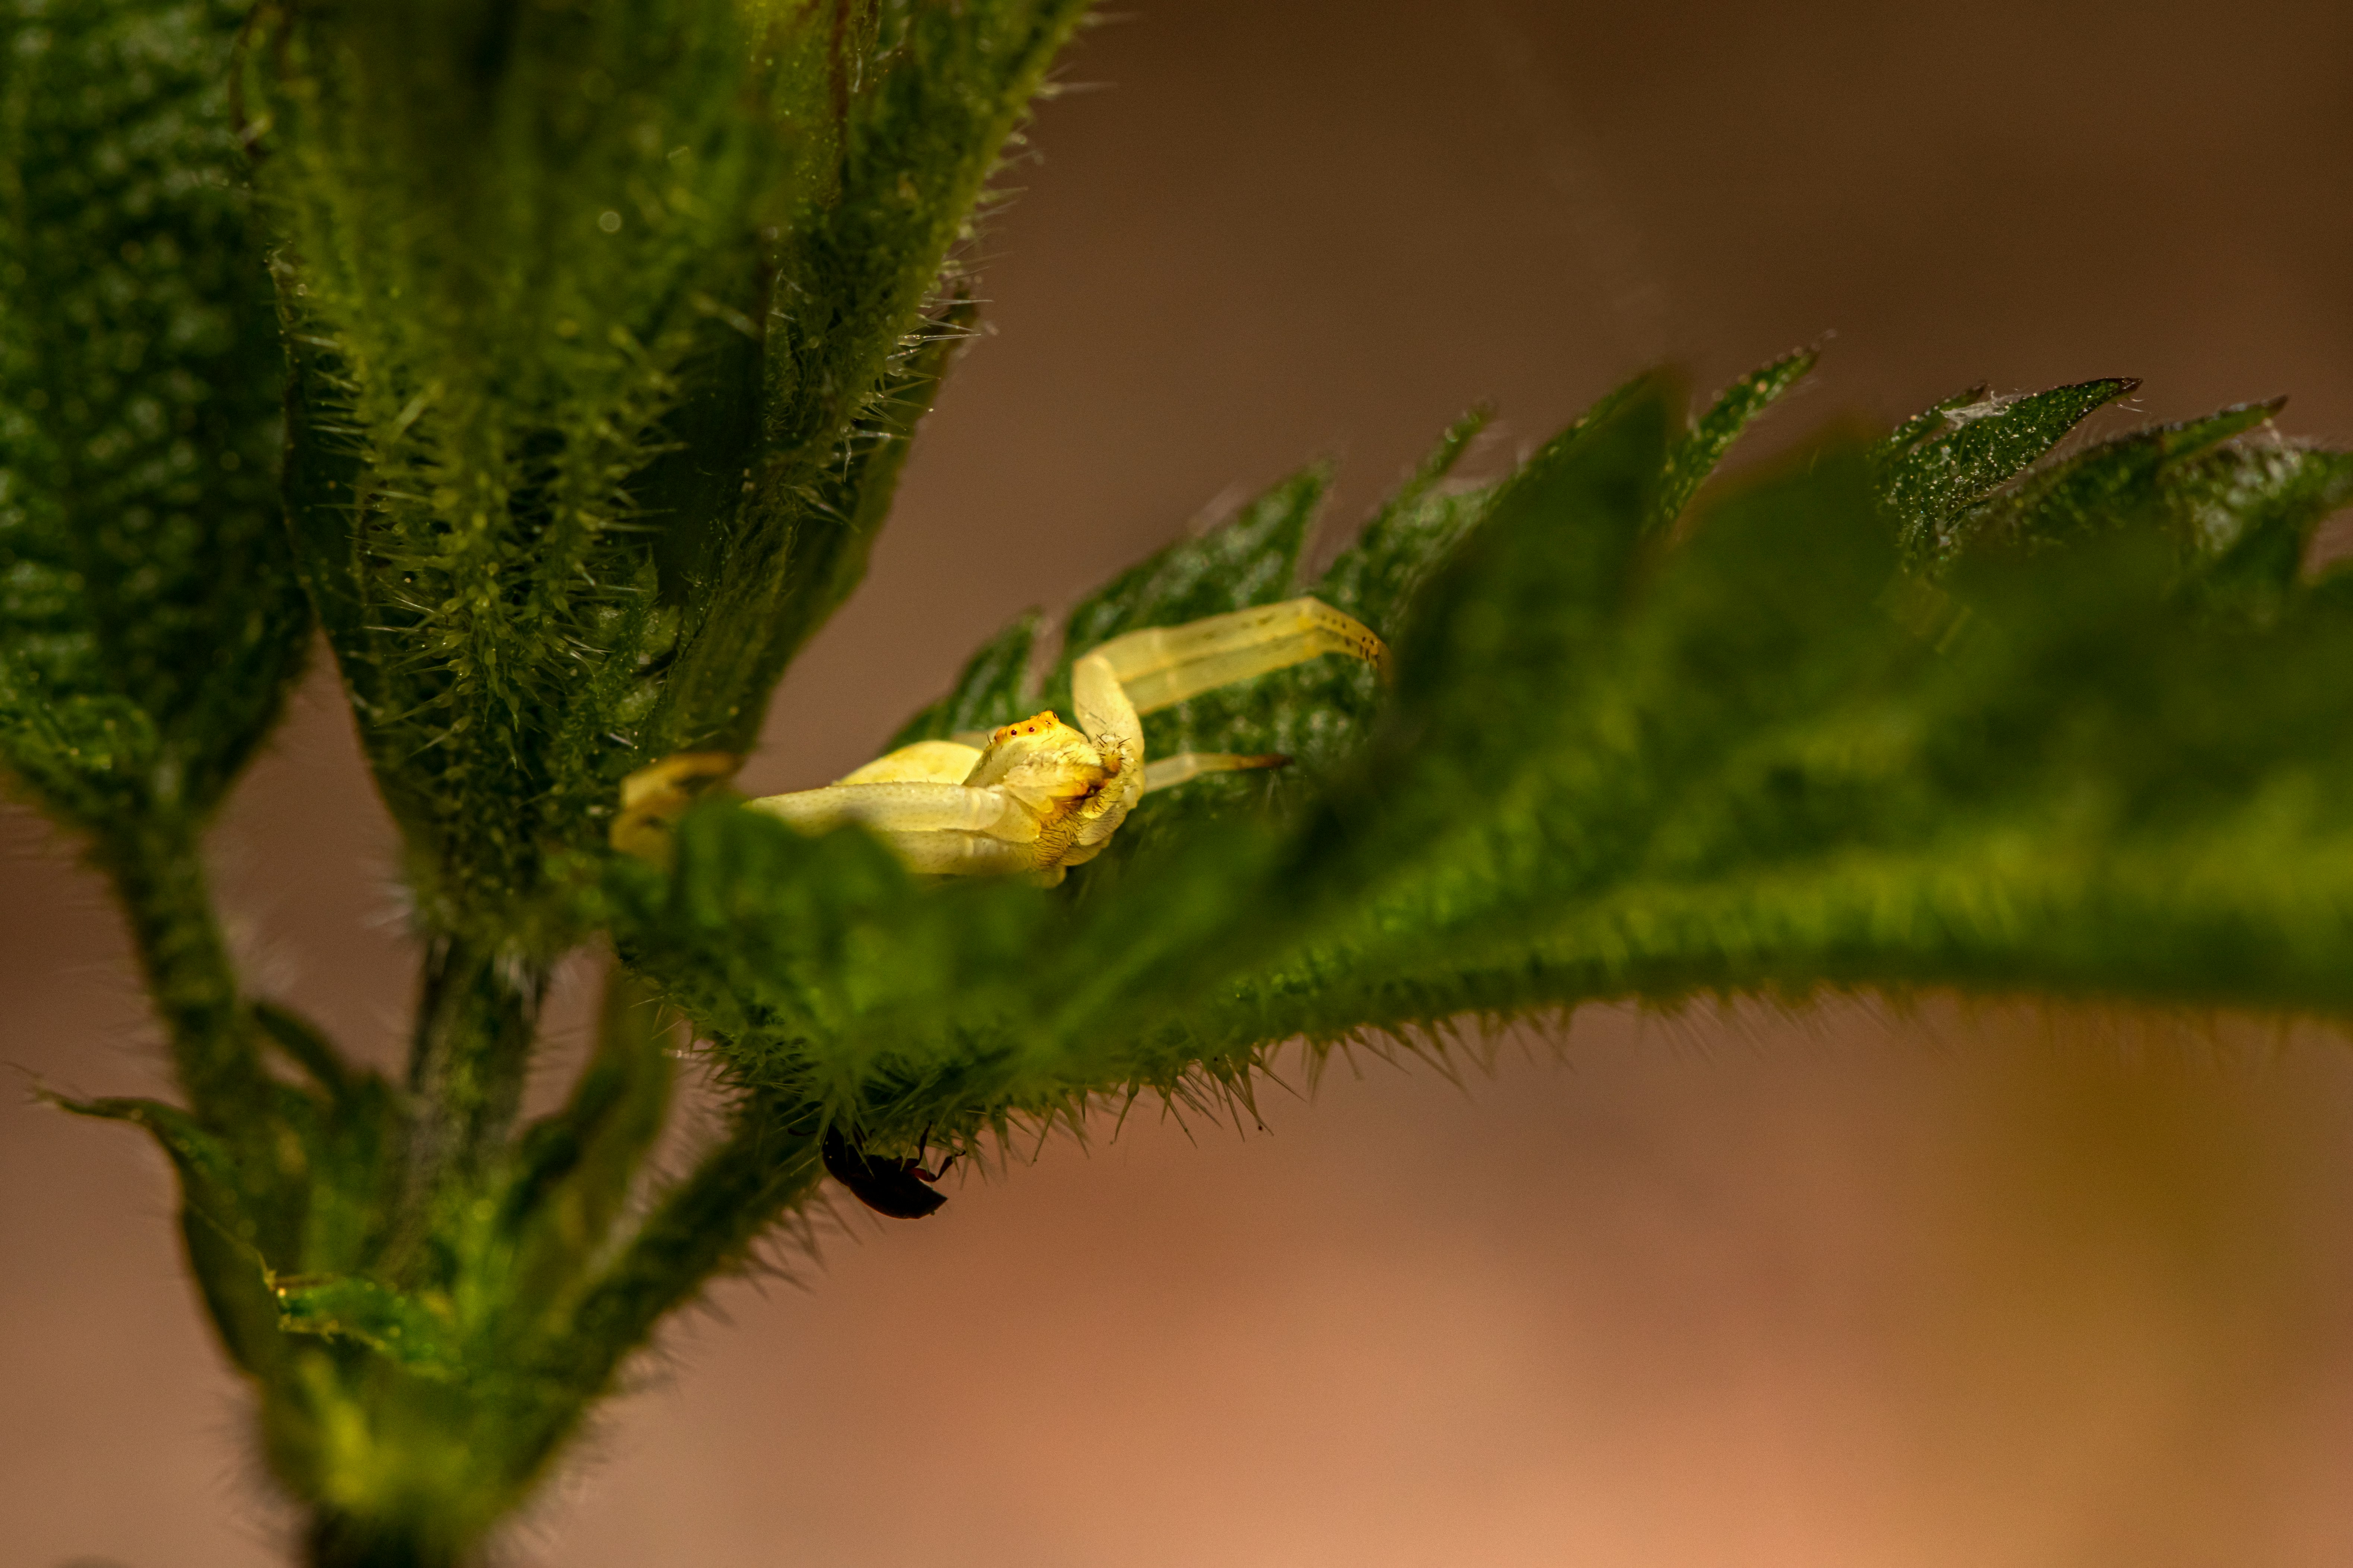 green grasshopper on green plant